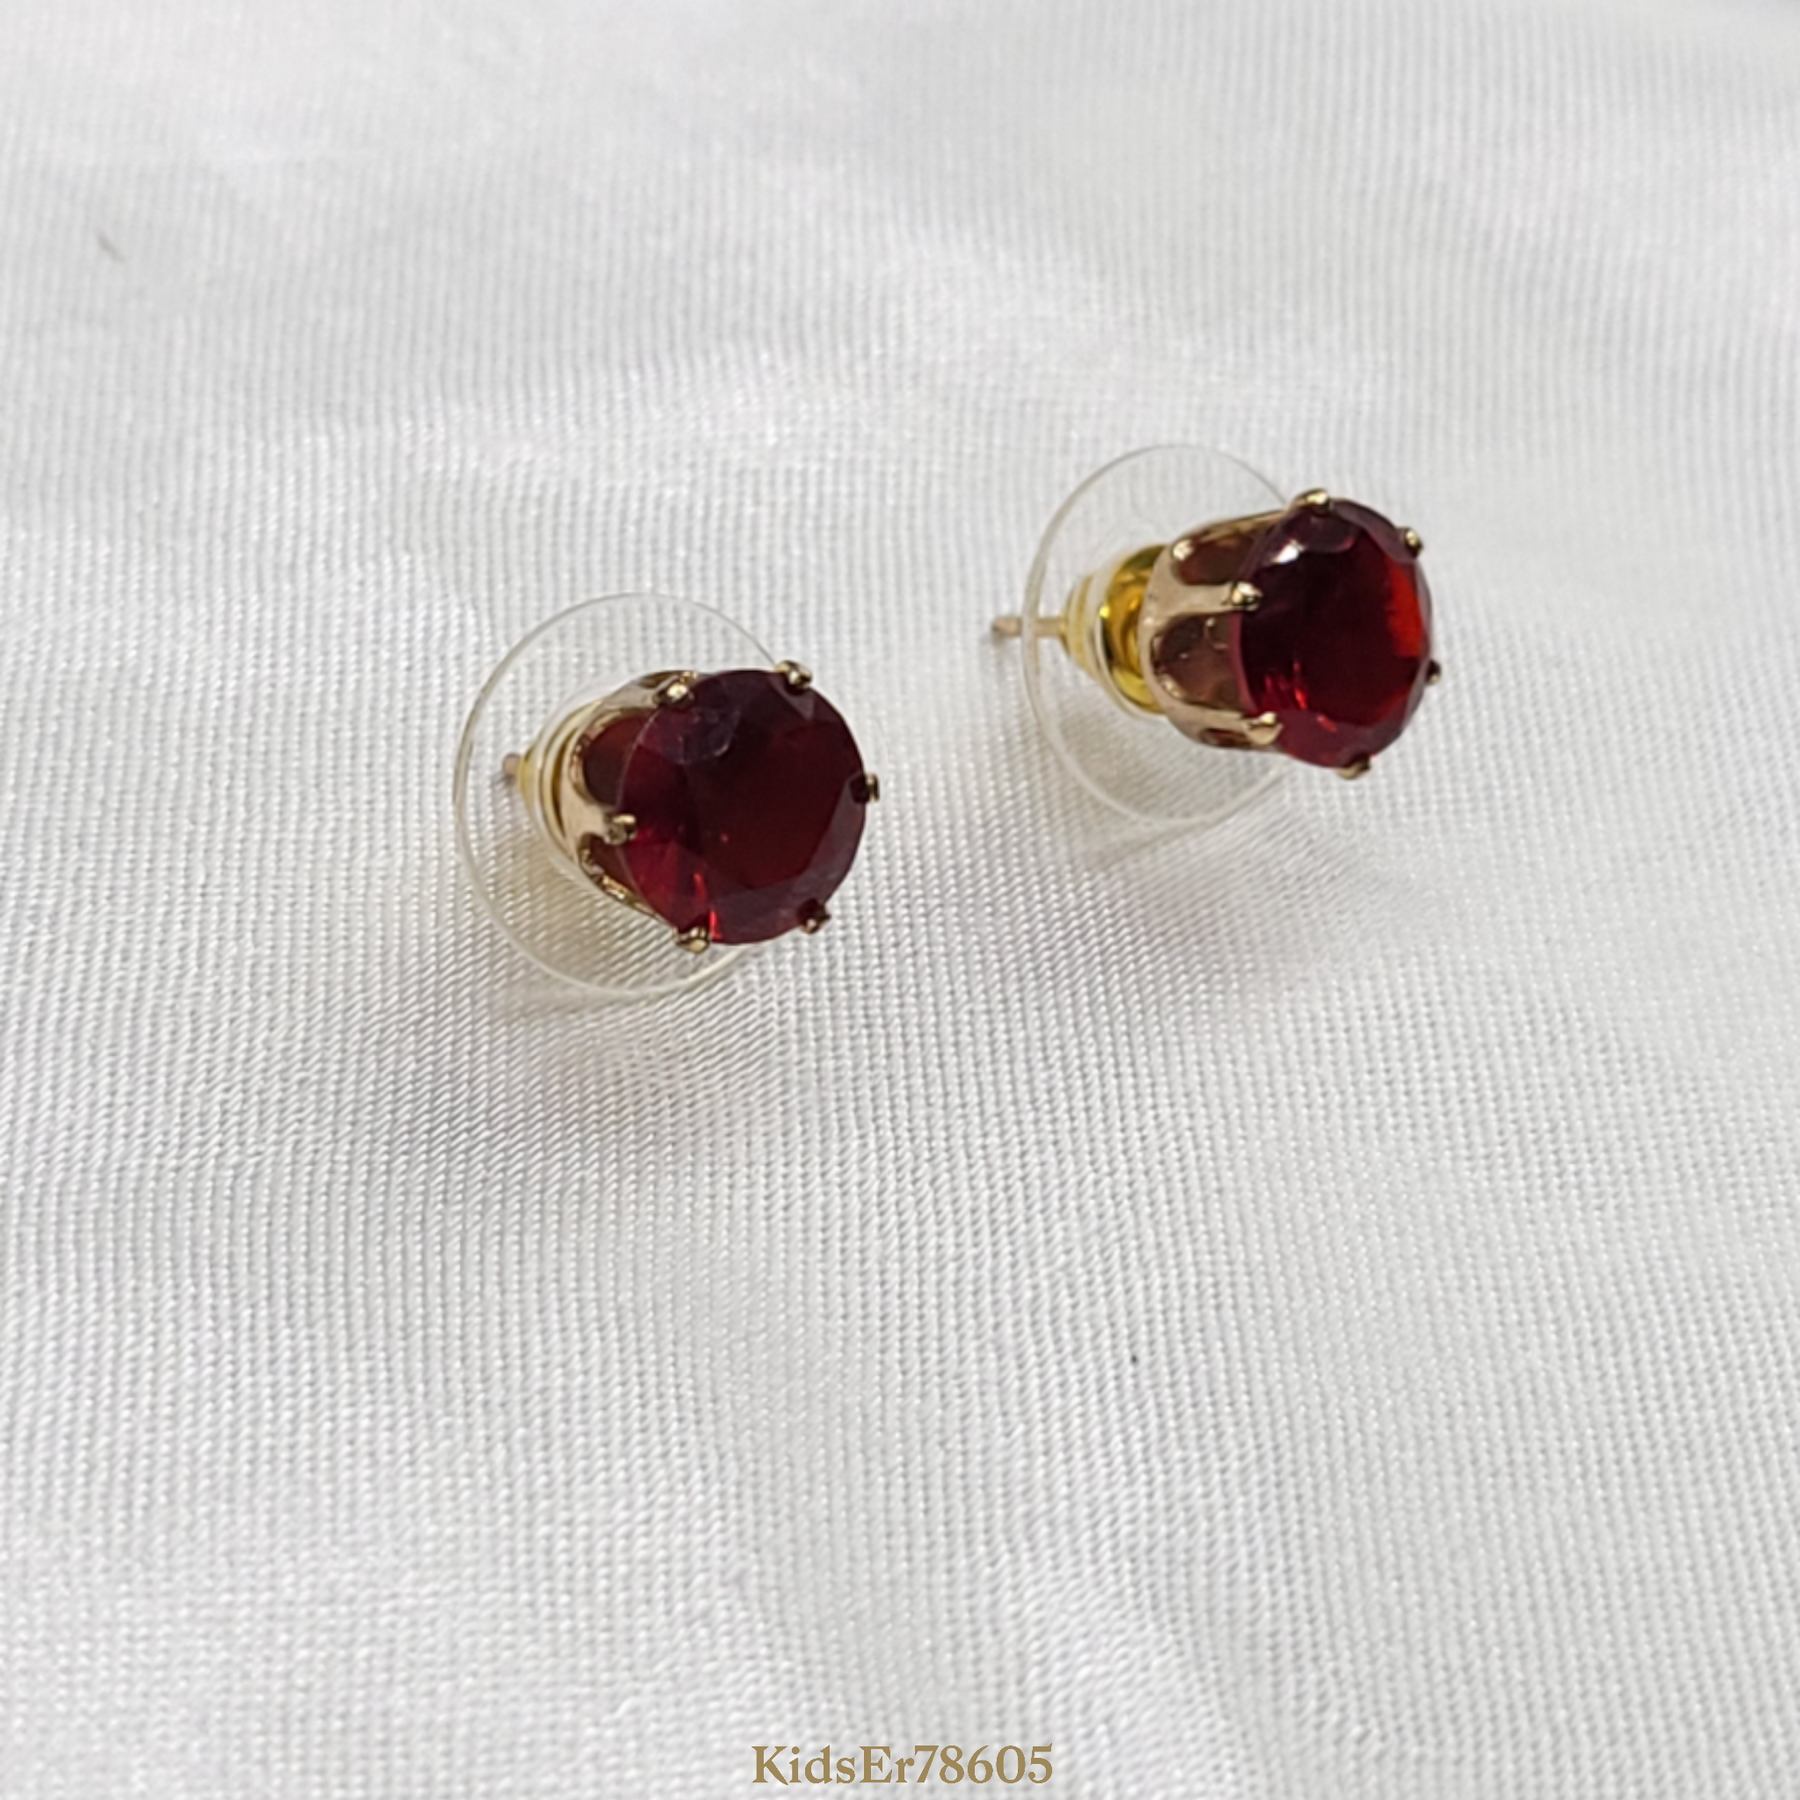 Red stone stud style earrings